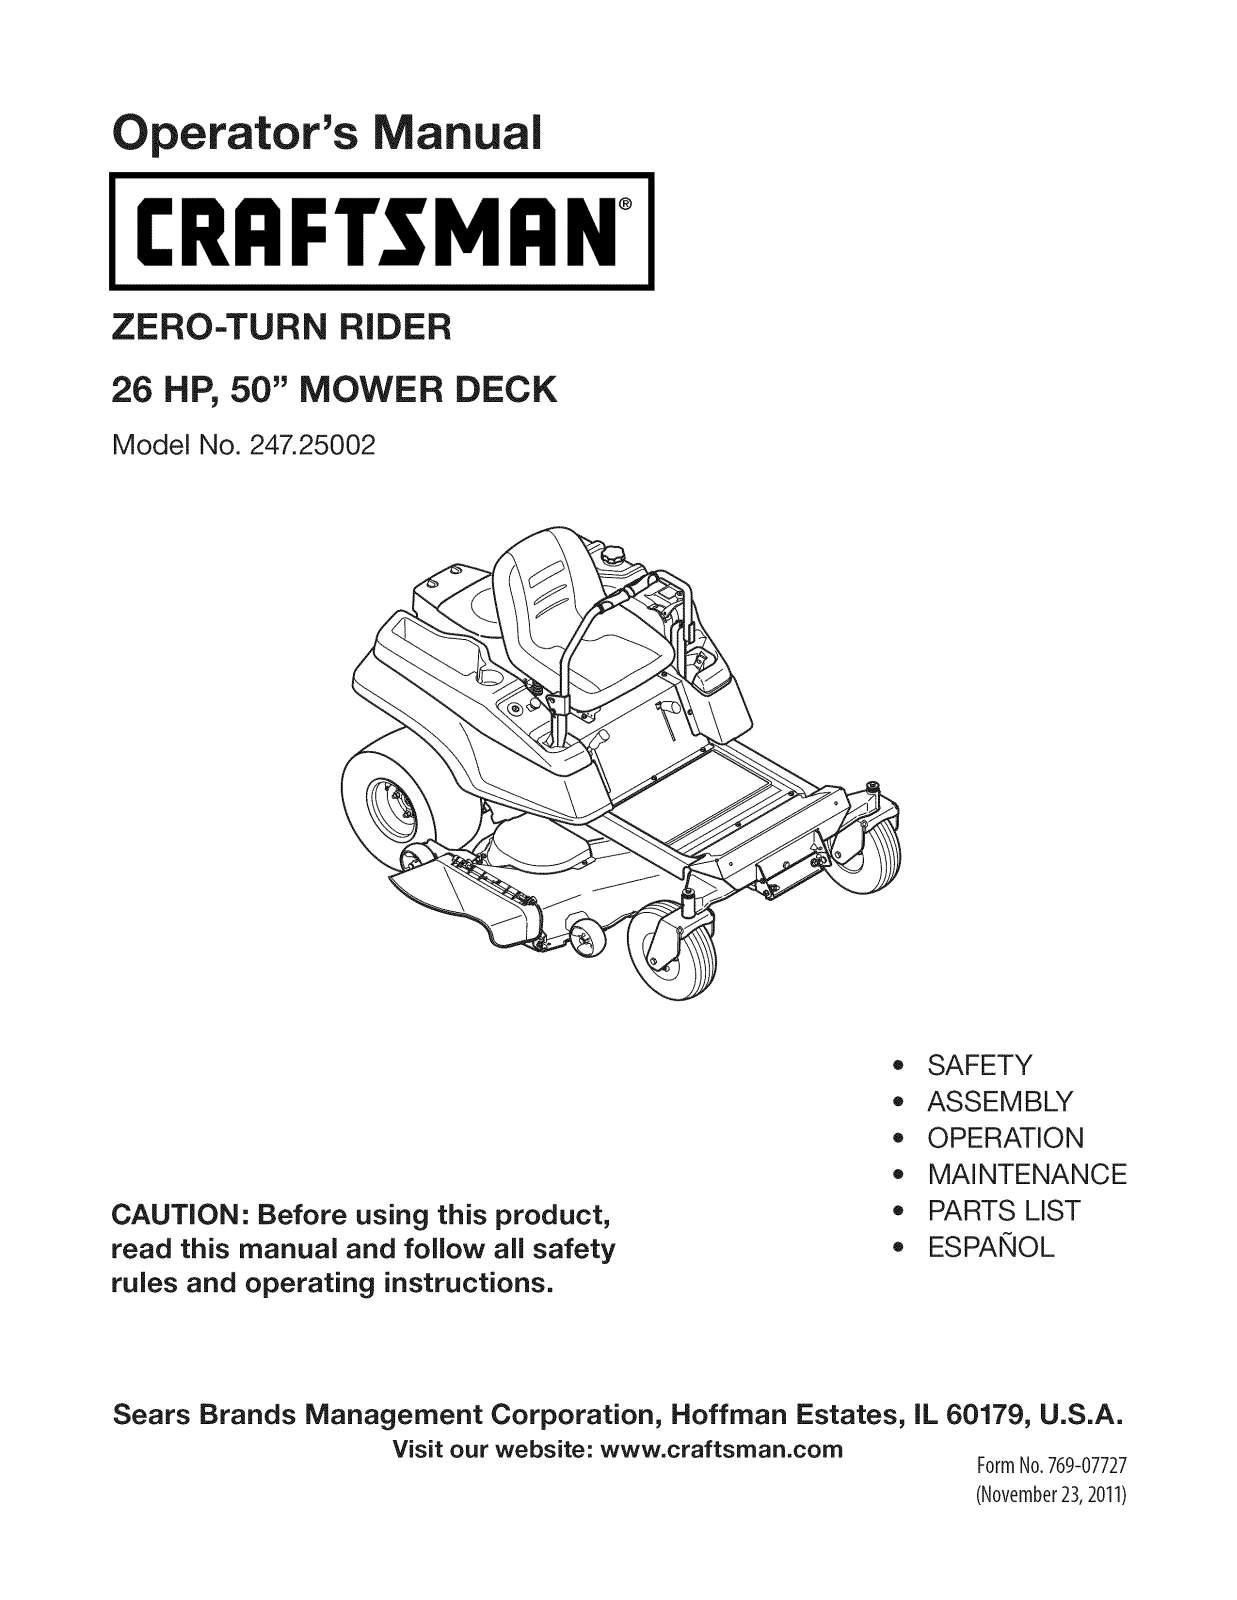 Craftsman 247250020 Owner’s Manual